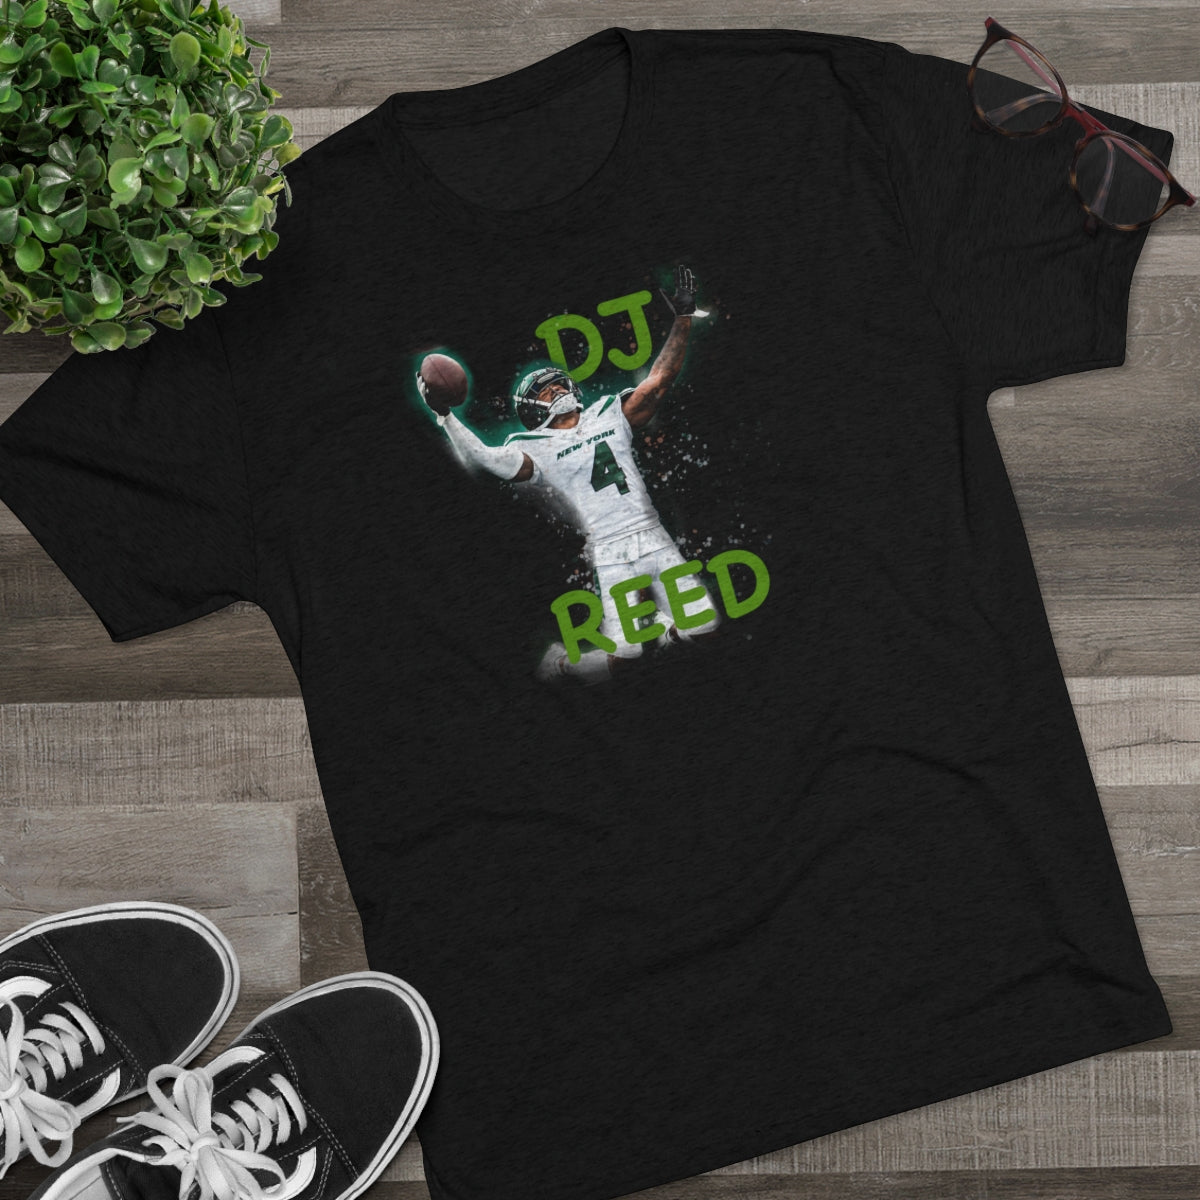 DJ REED Shirt - IsGoodBrand